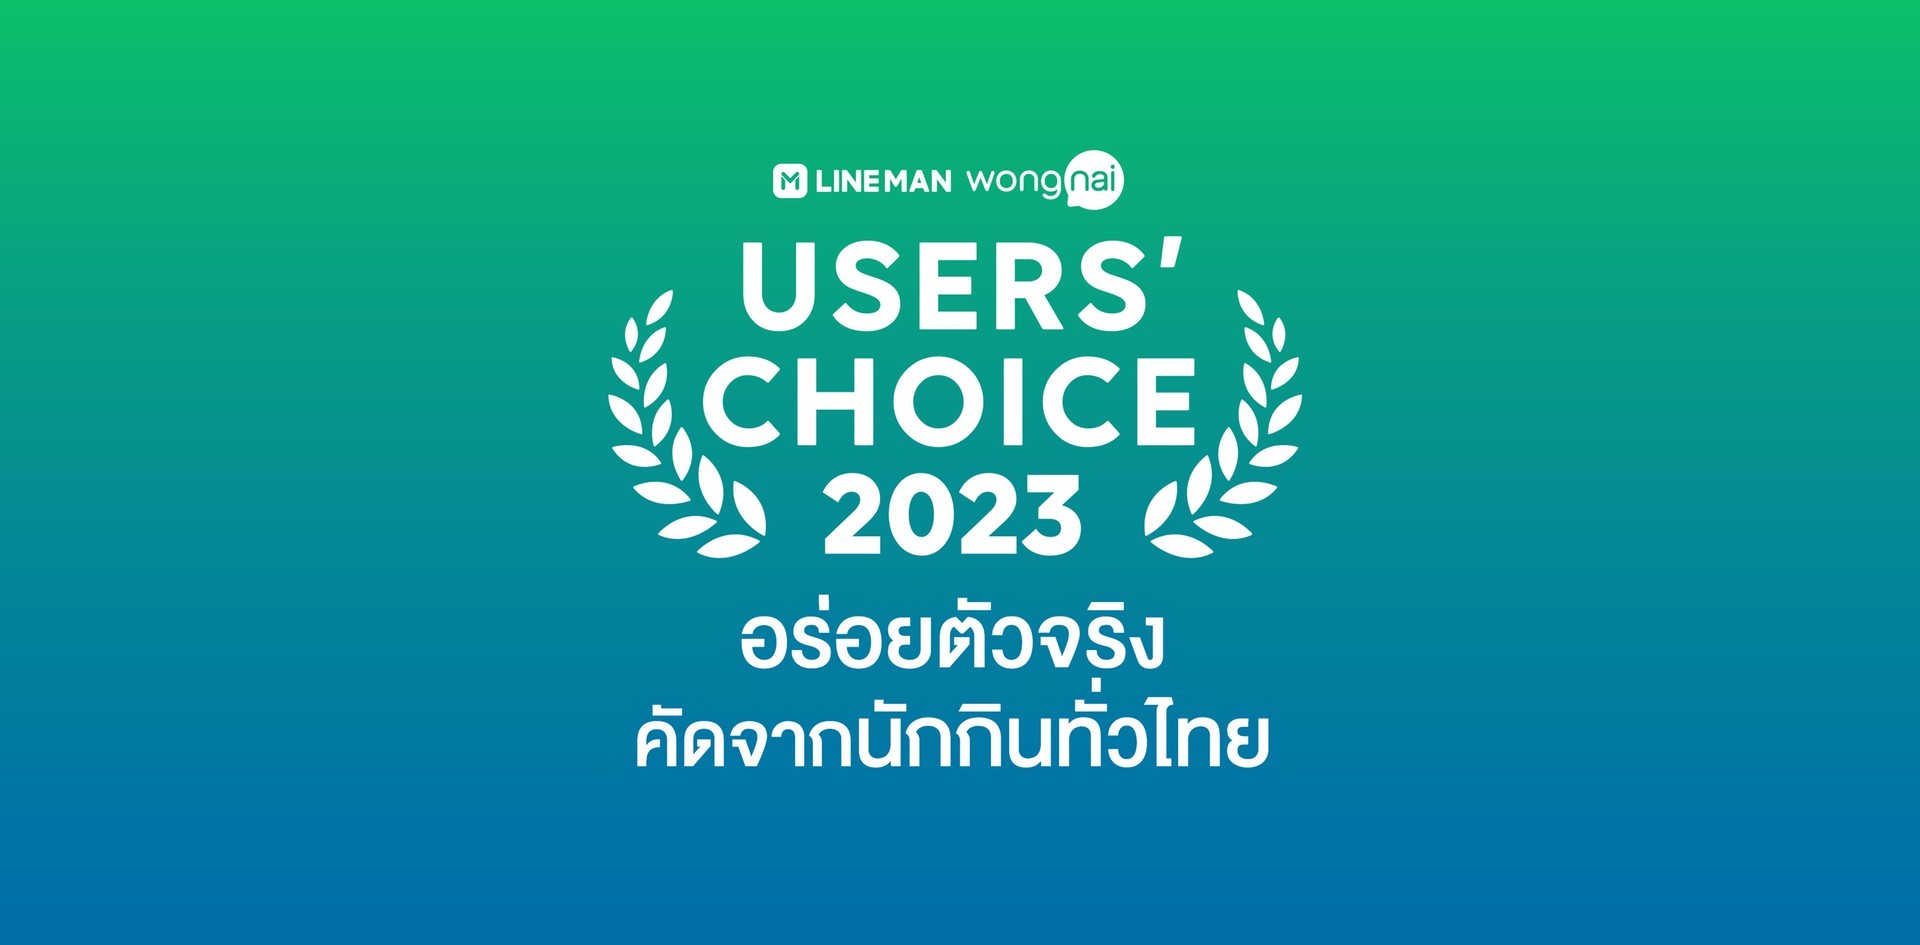 LINE MAN Wongnai Users' Choice 2023 รางวัลร้านอาหารจากคนไทย 25 ล้านคน